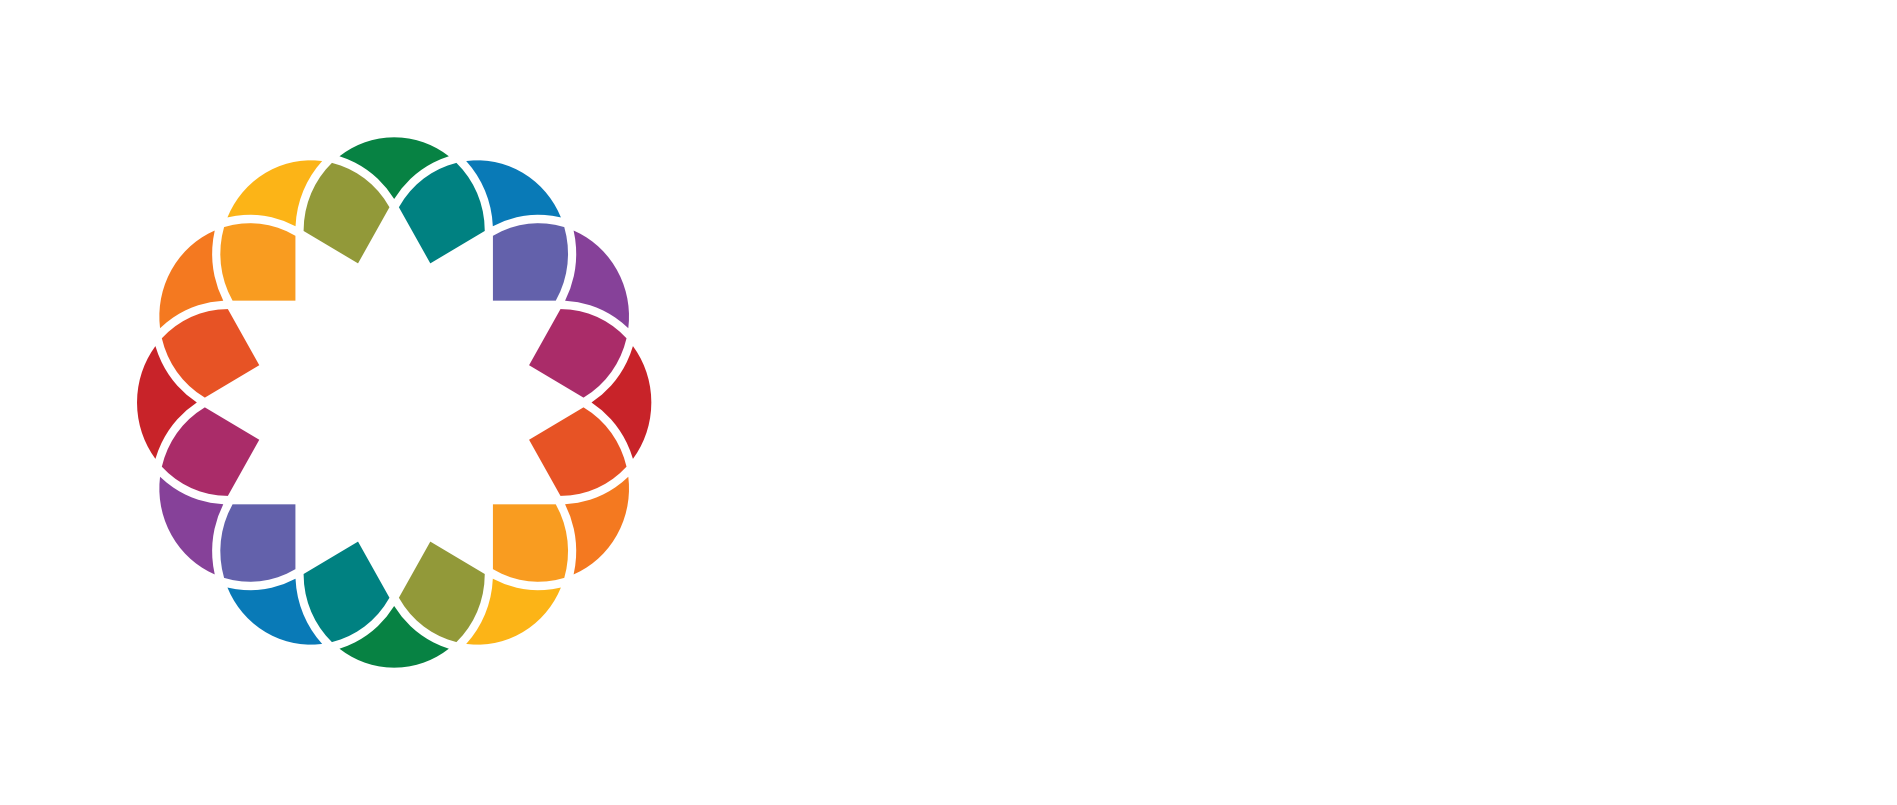 PFIP - Philippine Financial & Inter-Industry Pride Logo